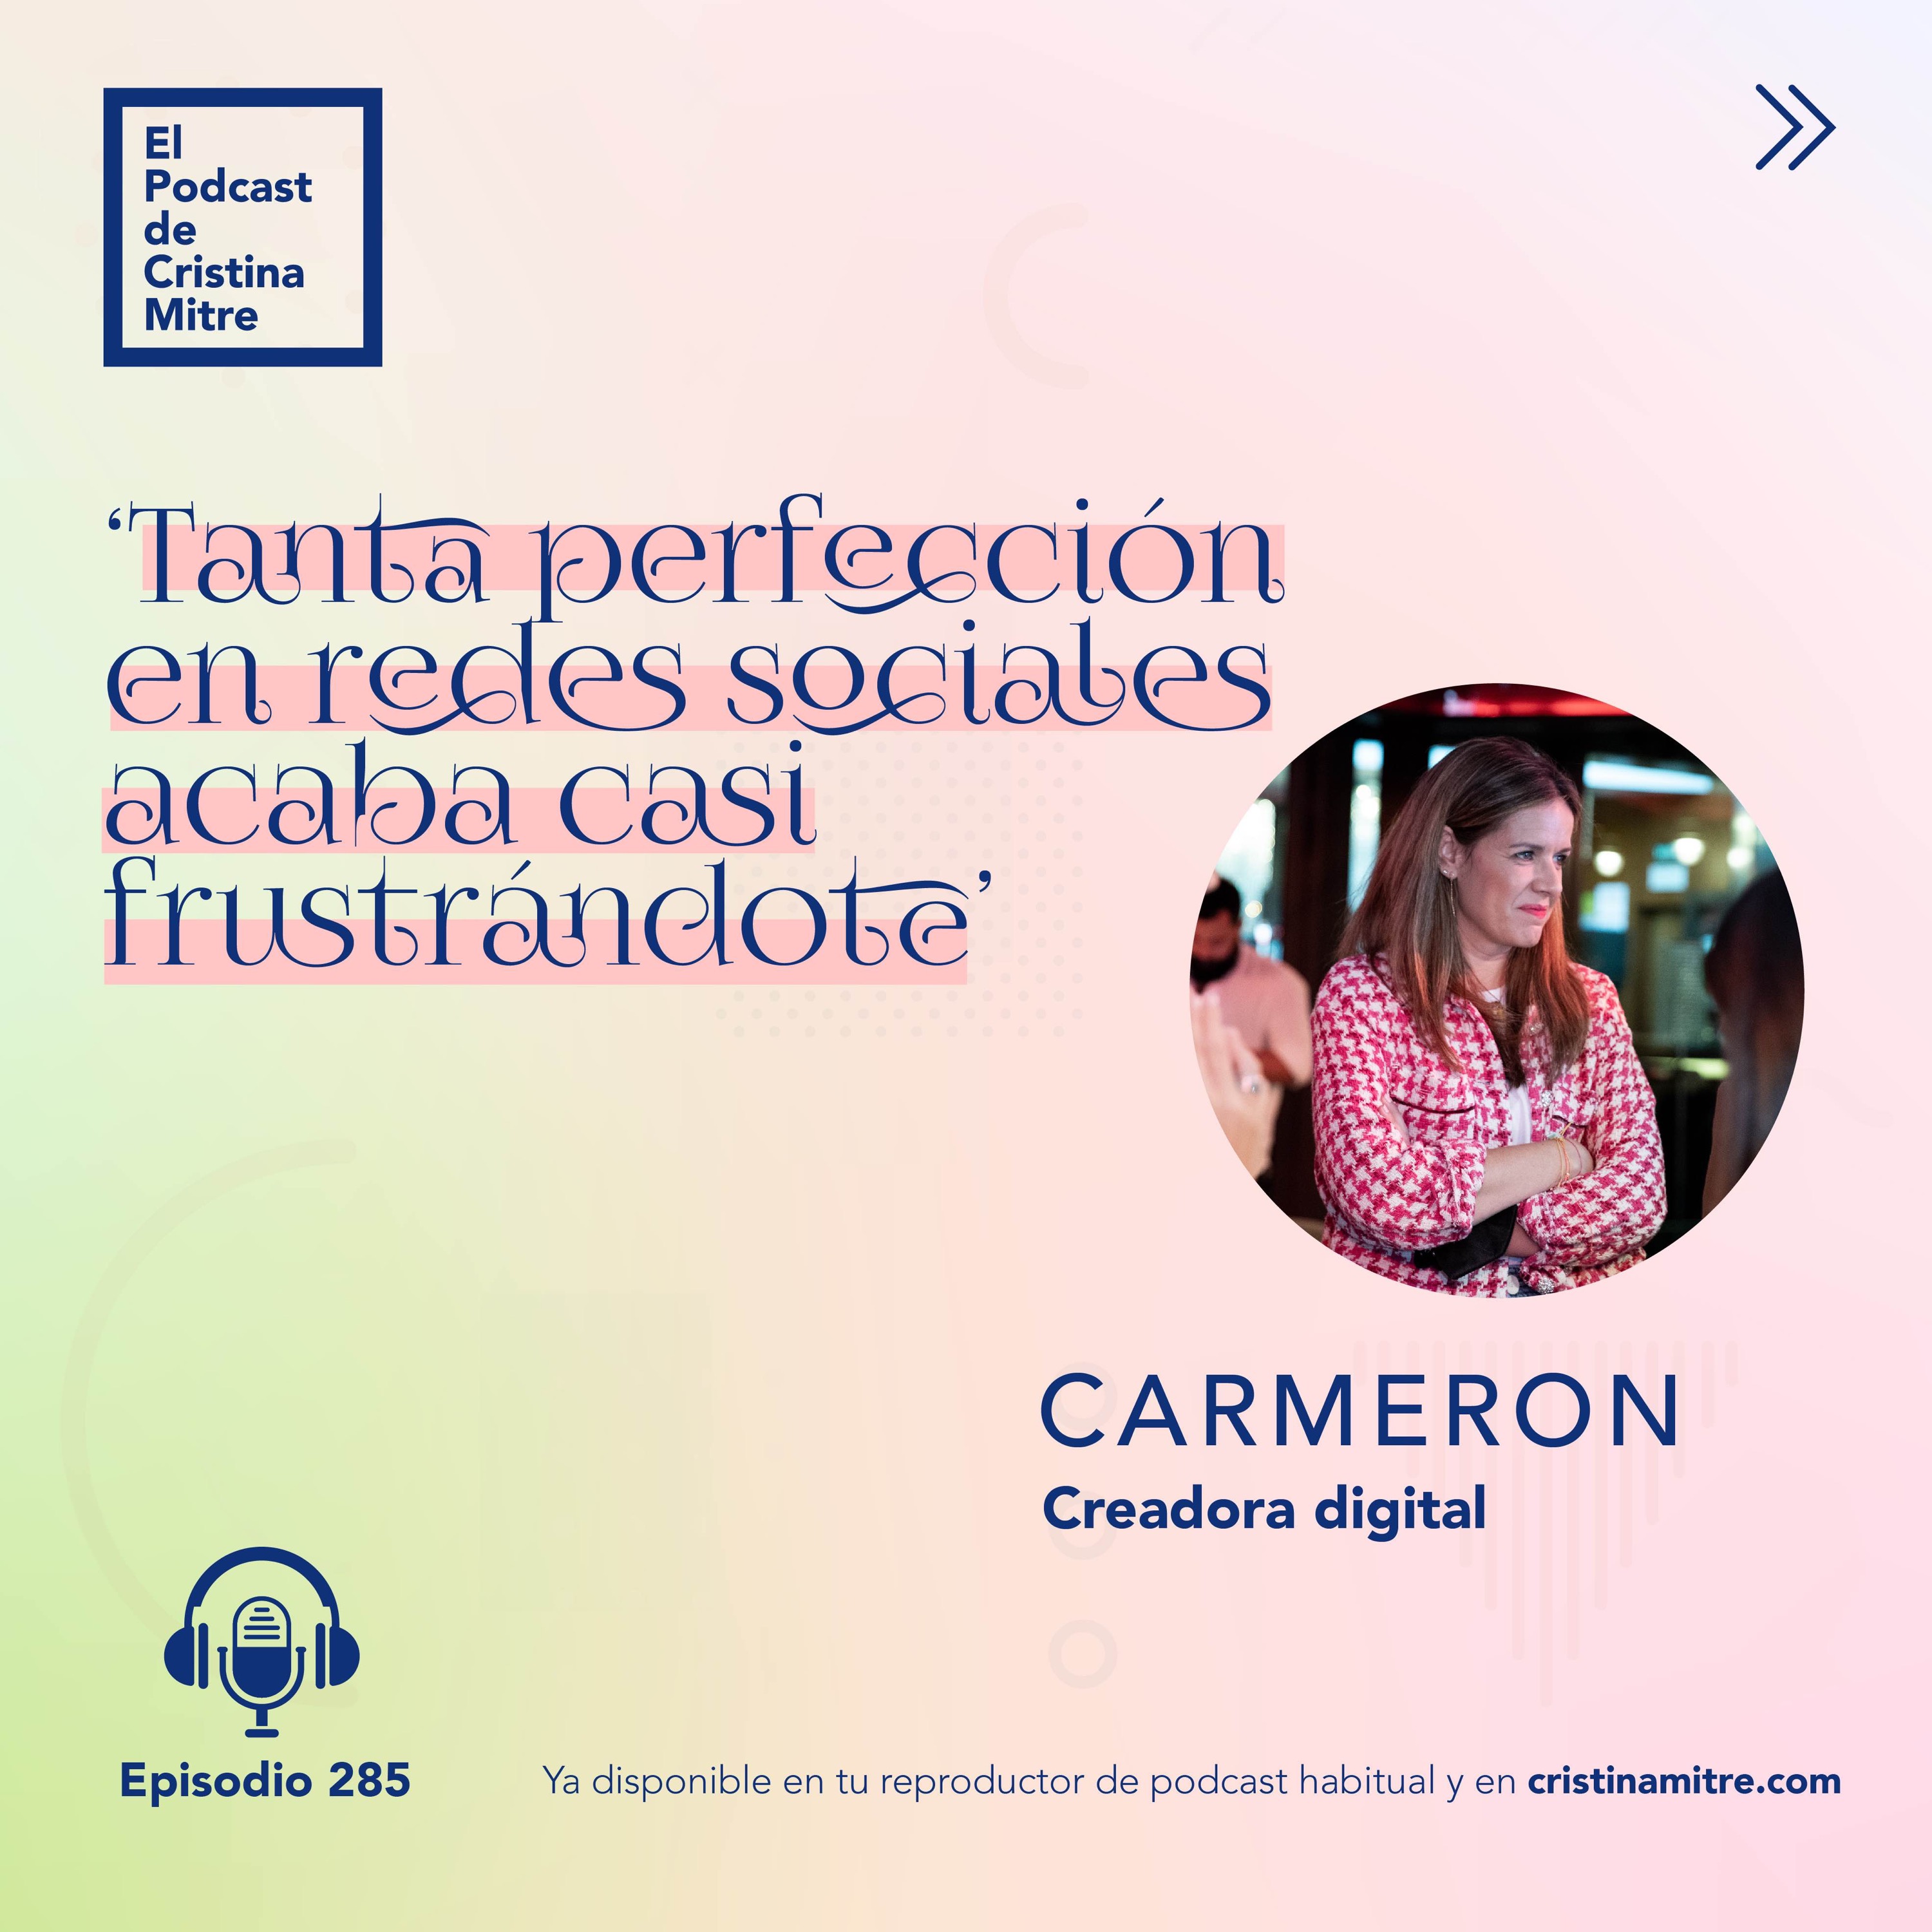 ‘Tanta perfección en redes sociales acaba casi frustrándote', con Carmen Cachero (@Carmeron). Episodio 285